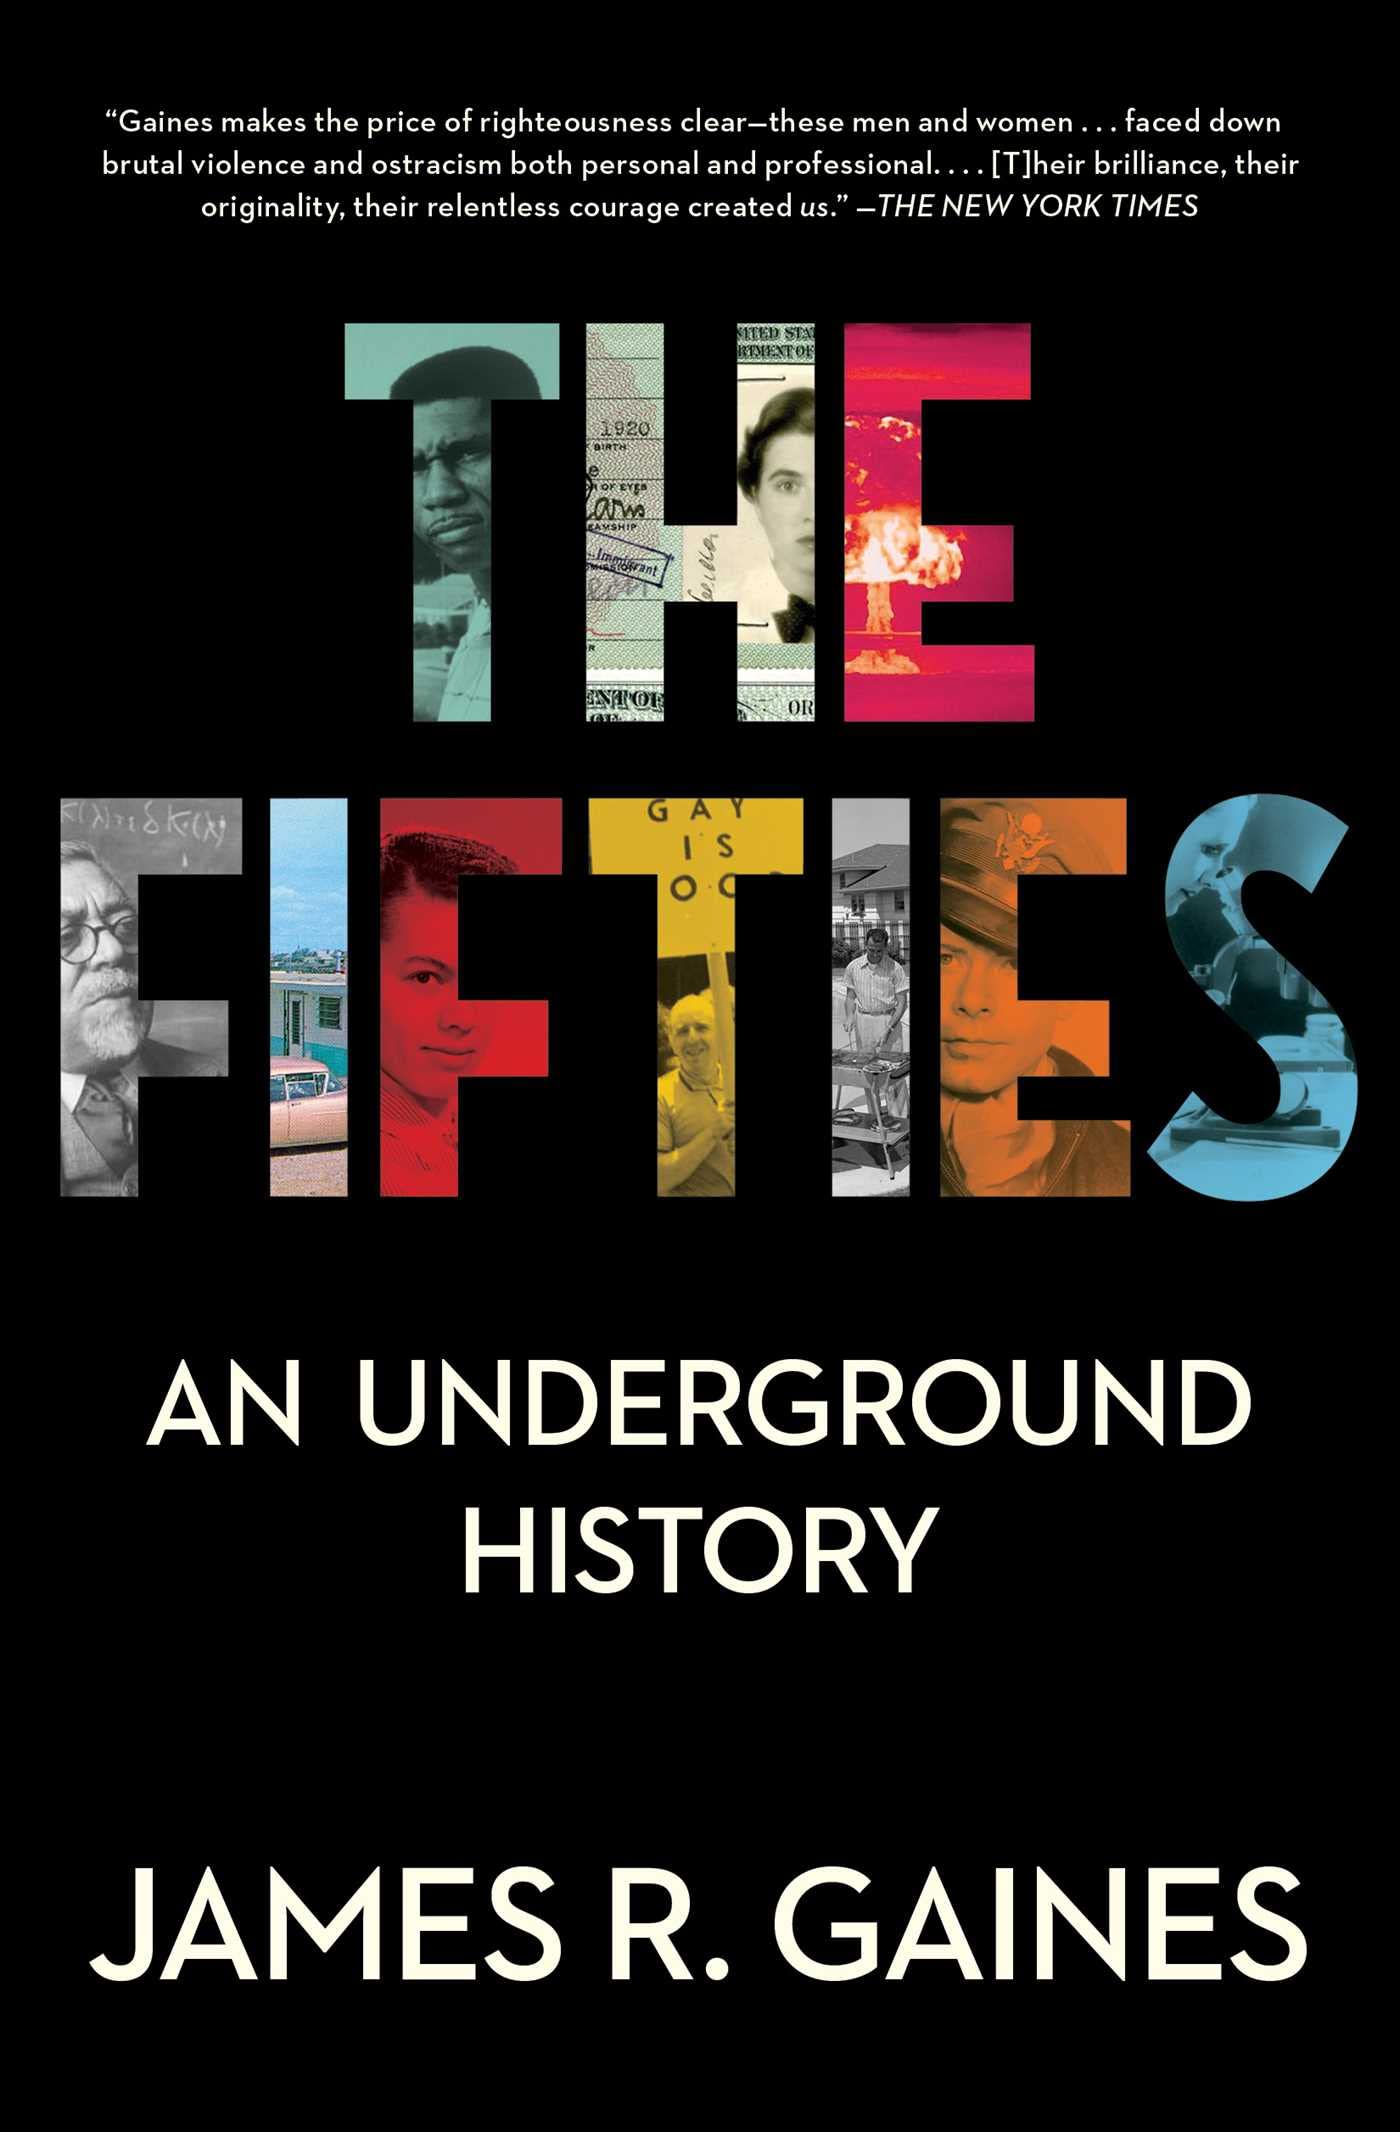 Fifties: An Underground History